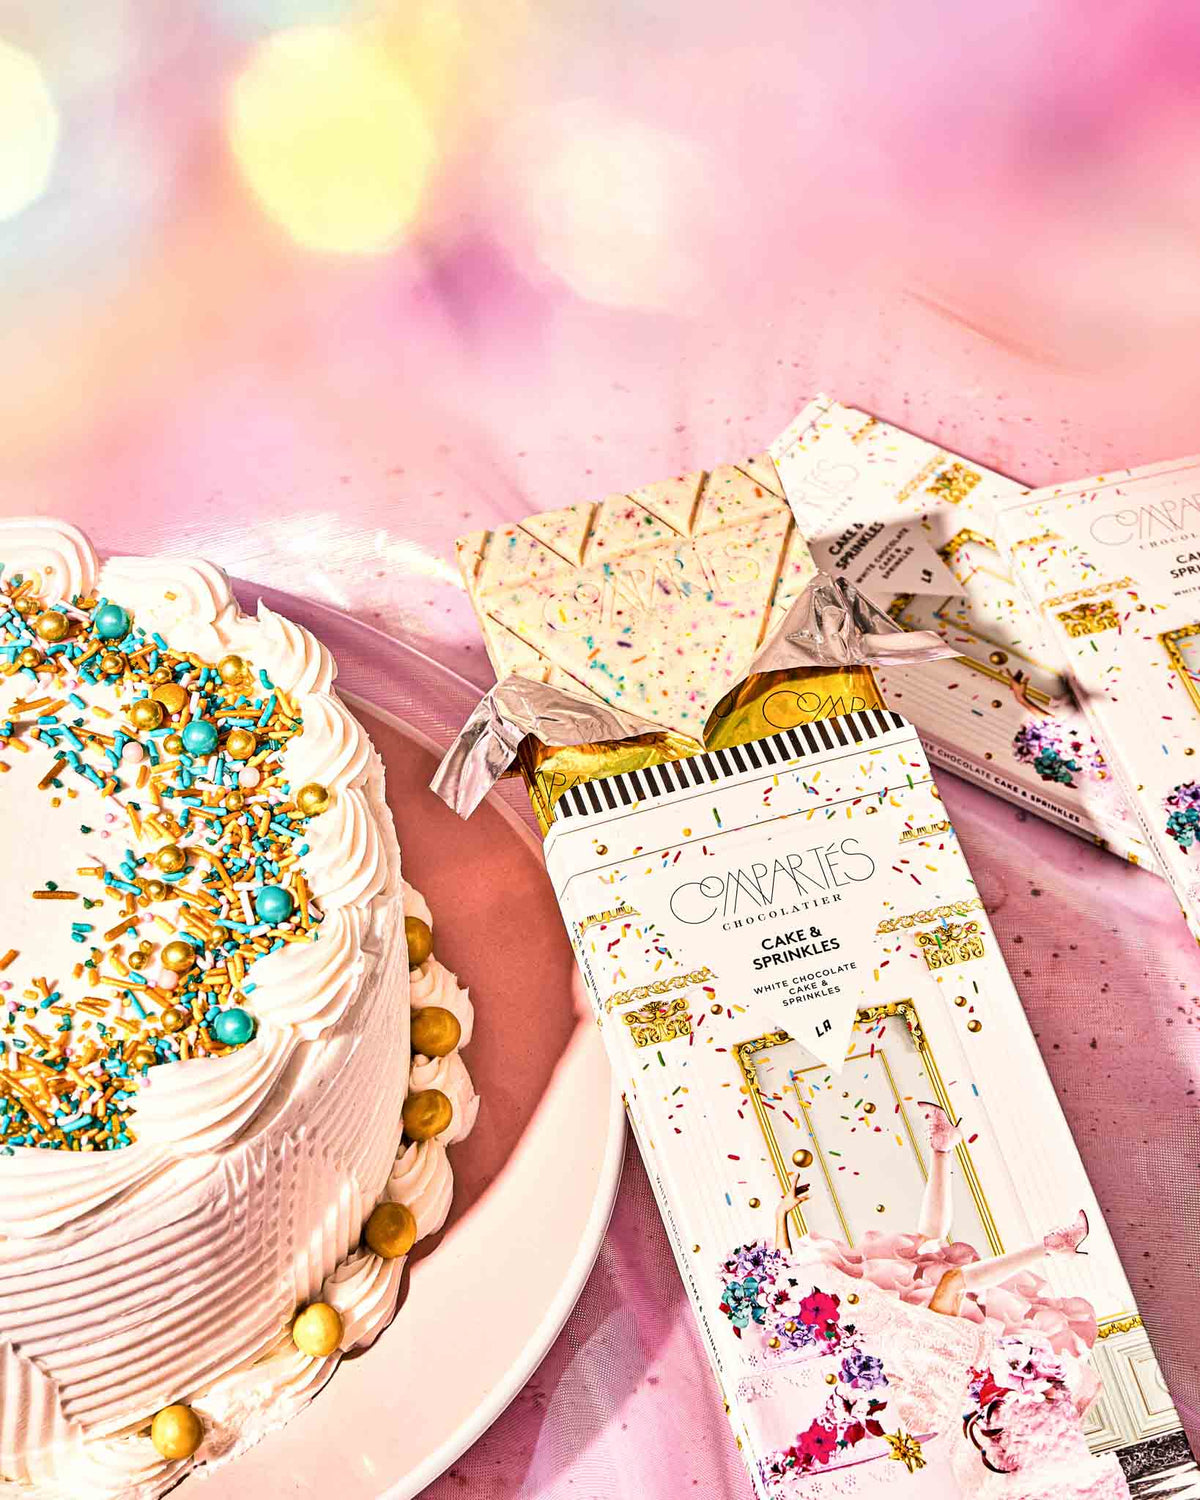 Birthday Cake & Sprinkles Chocolate Bar